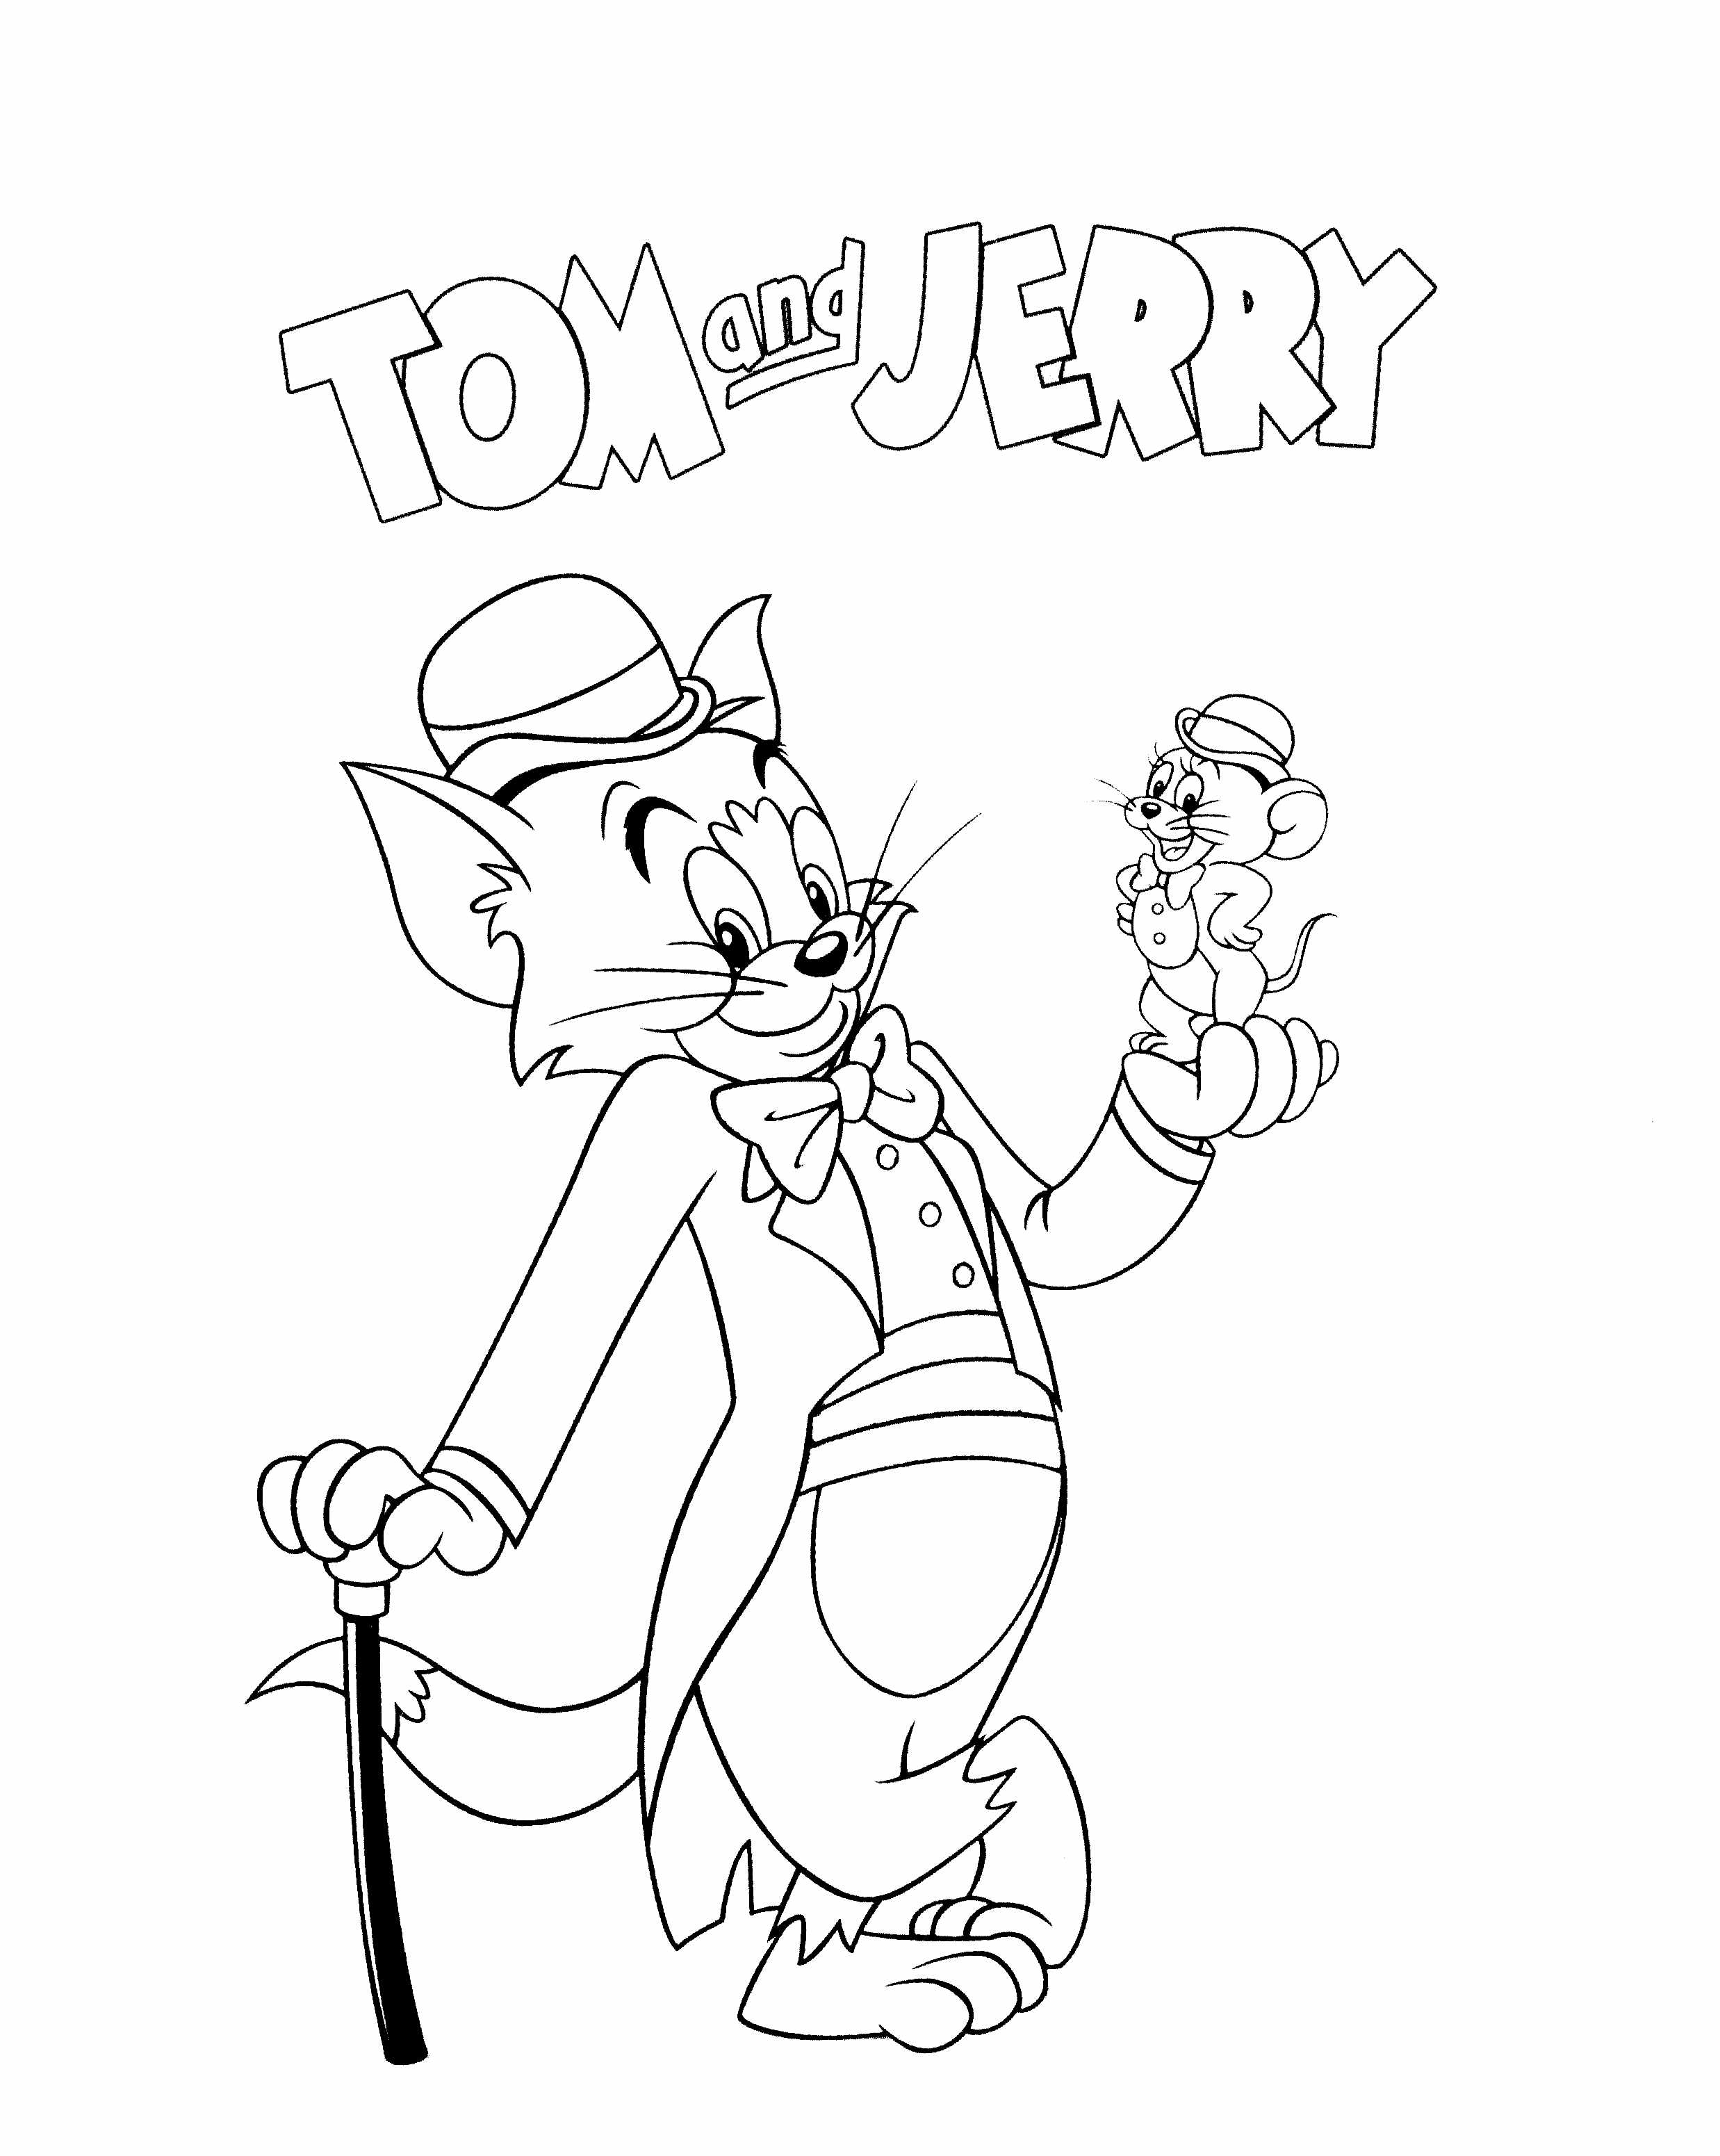 tom and jerry cartoon friends